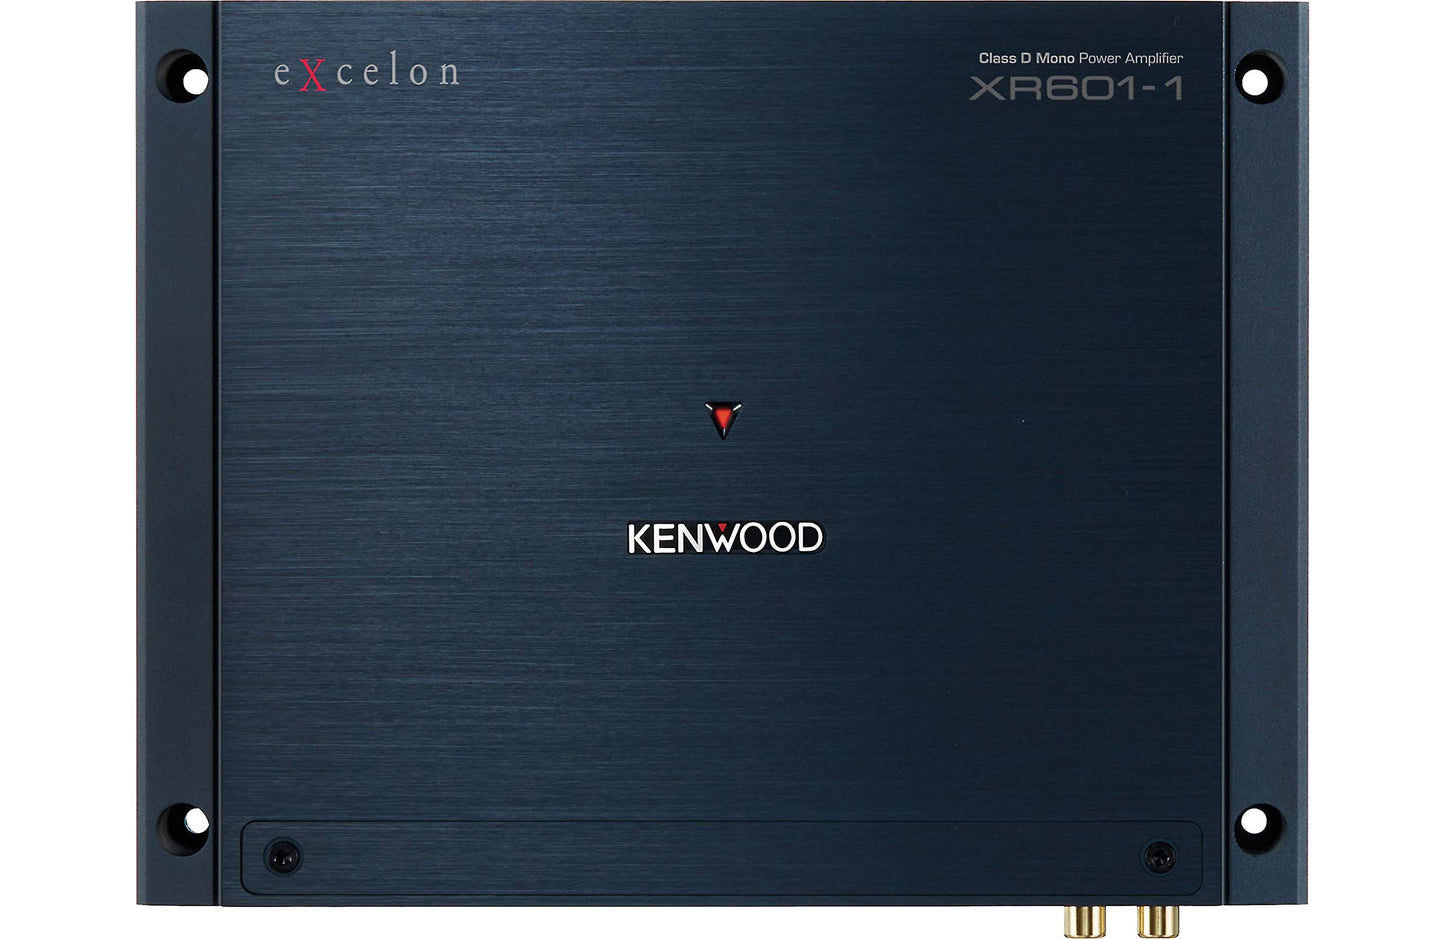 Kenwood XR601-1 eXcelon 600-Watt Monoblock Subwoofer Car Amplifier